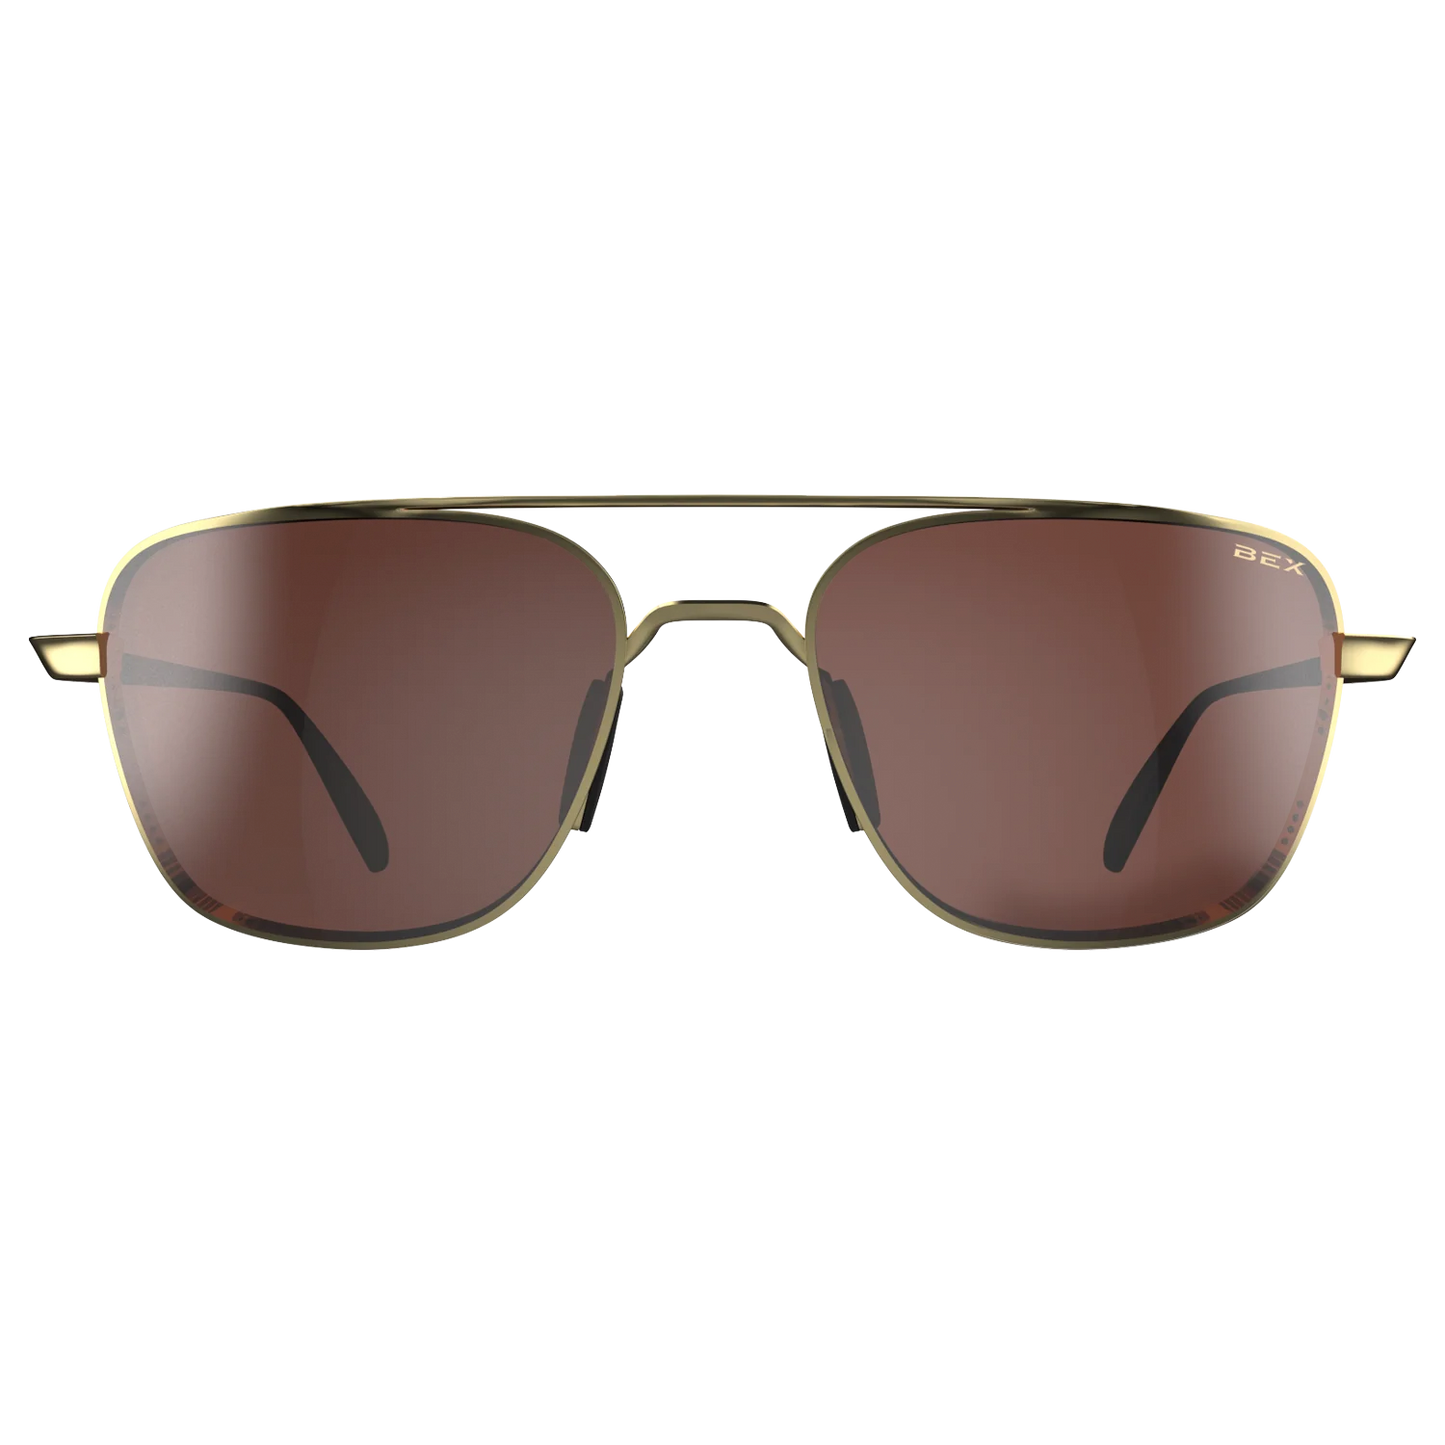 The Mach Bex Sunglasses